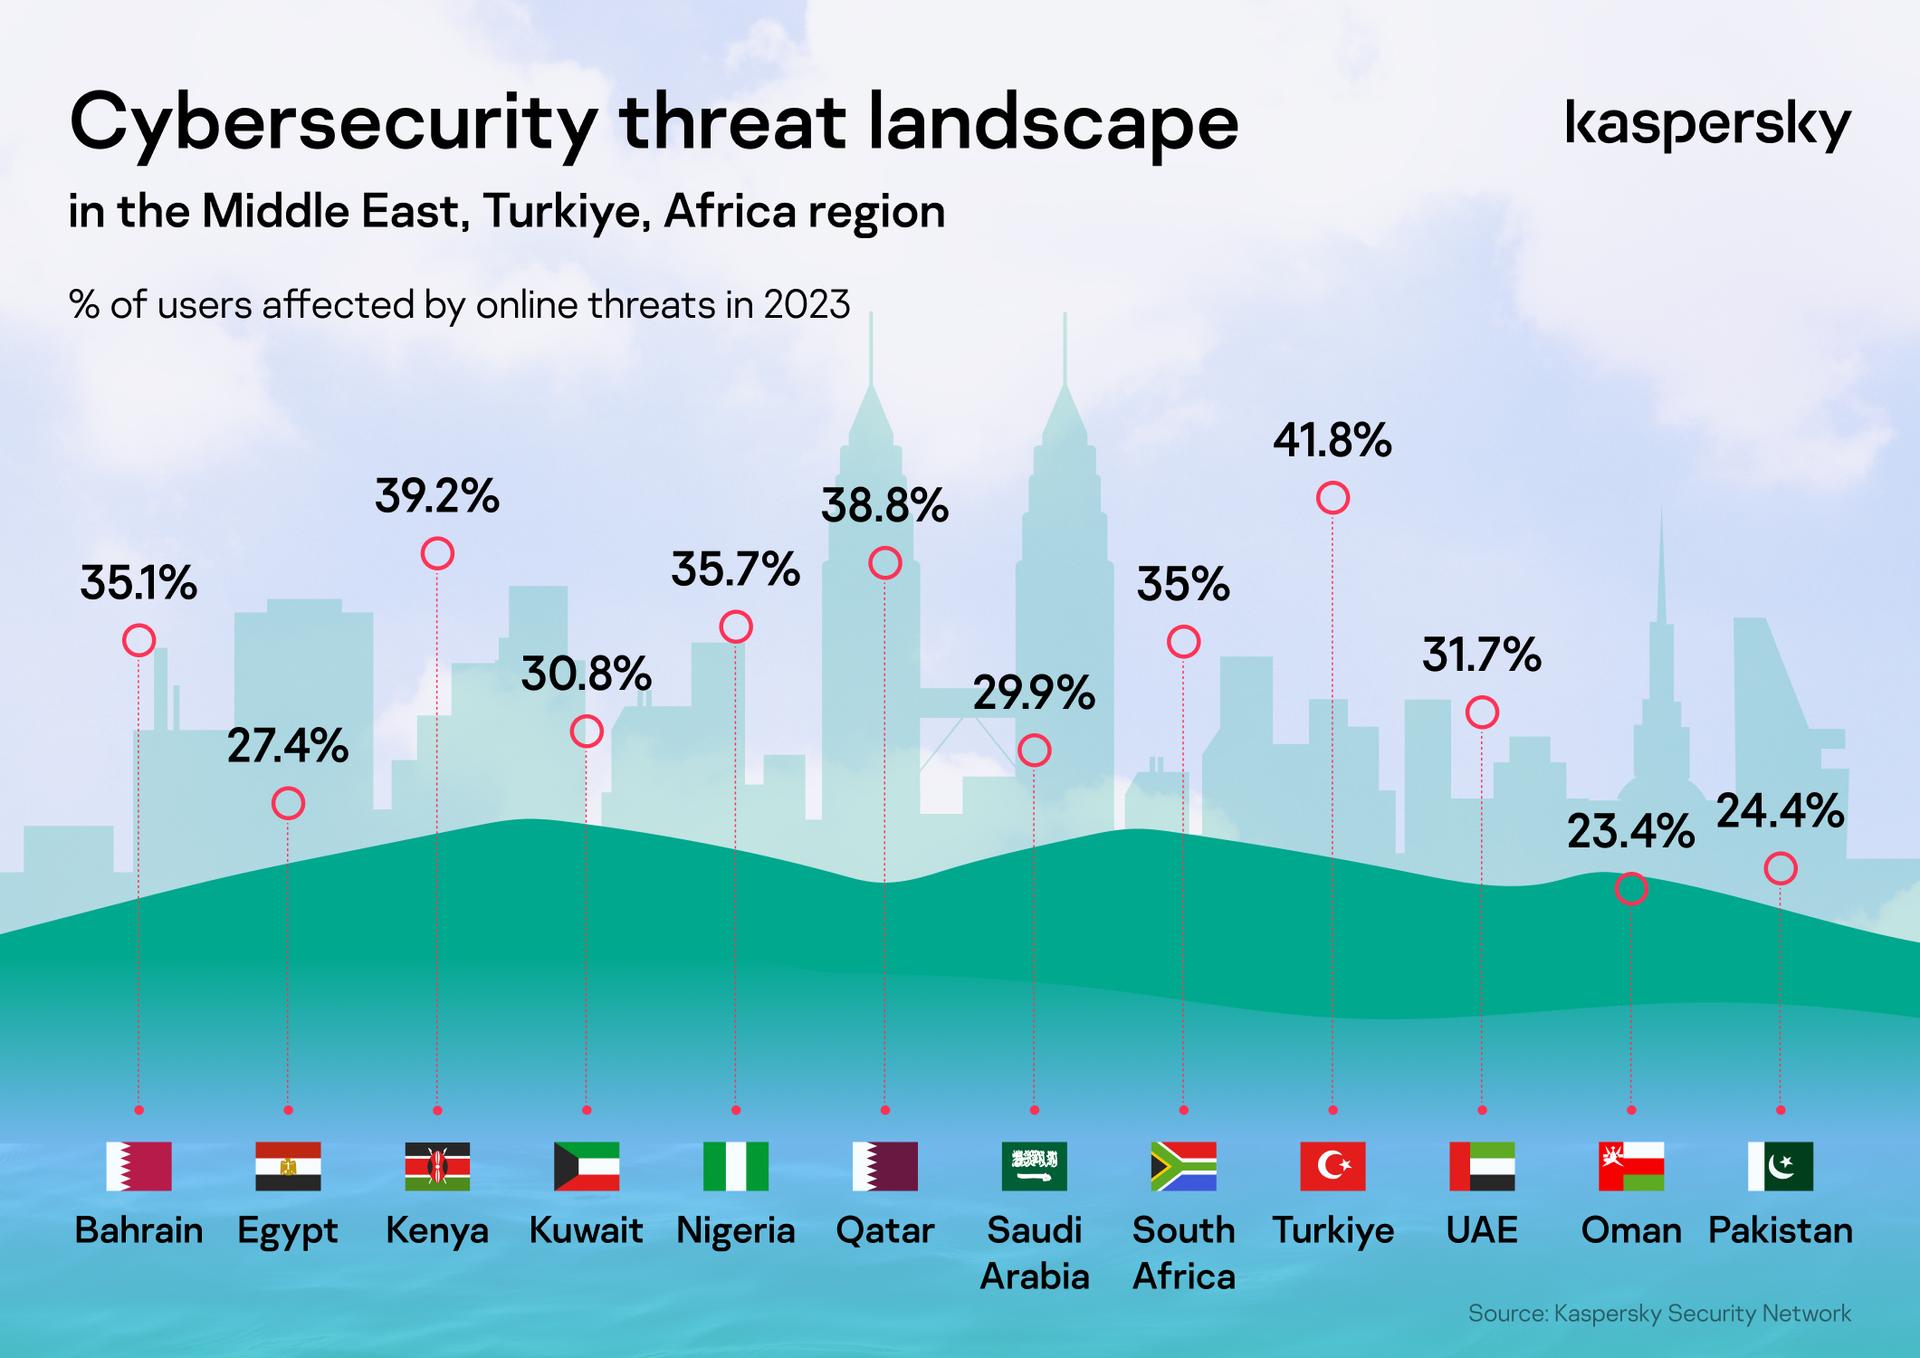 Kaspersky Infographic_Cybersecurity threat landscape in the META region 